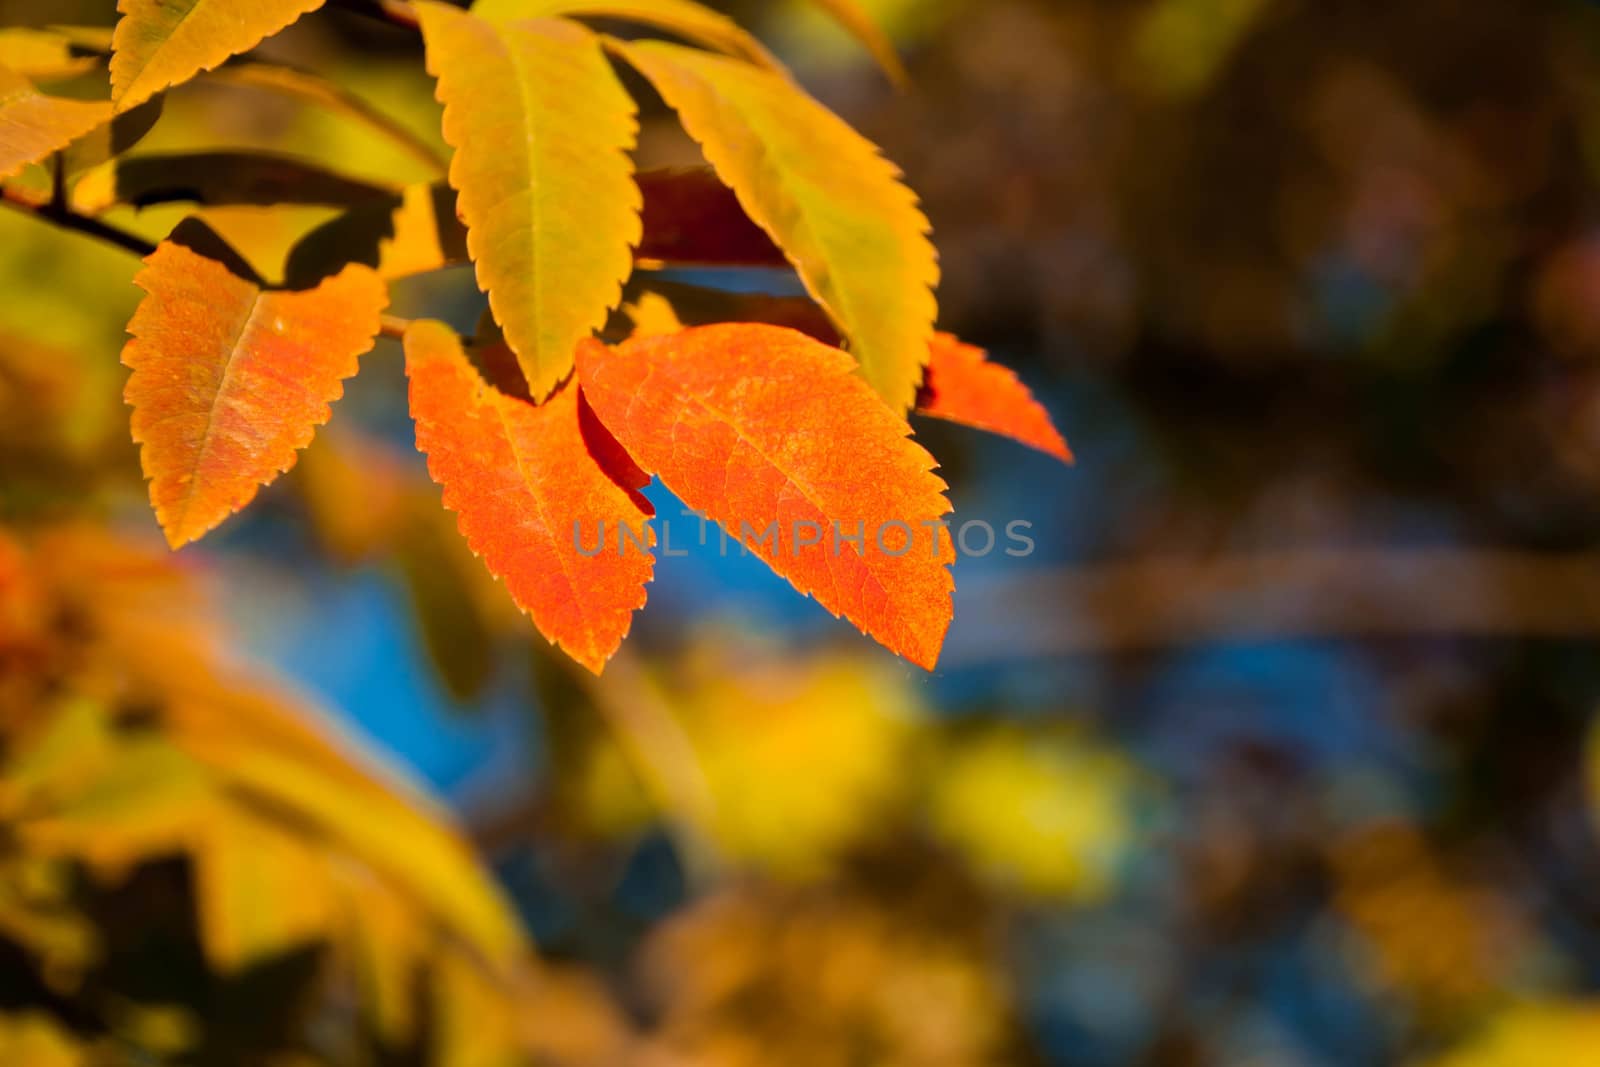 Autumn in the park: golden rowan tree leaves in the sunlight